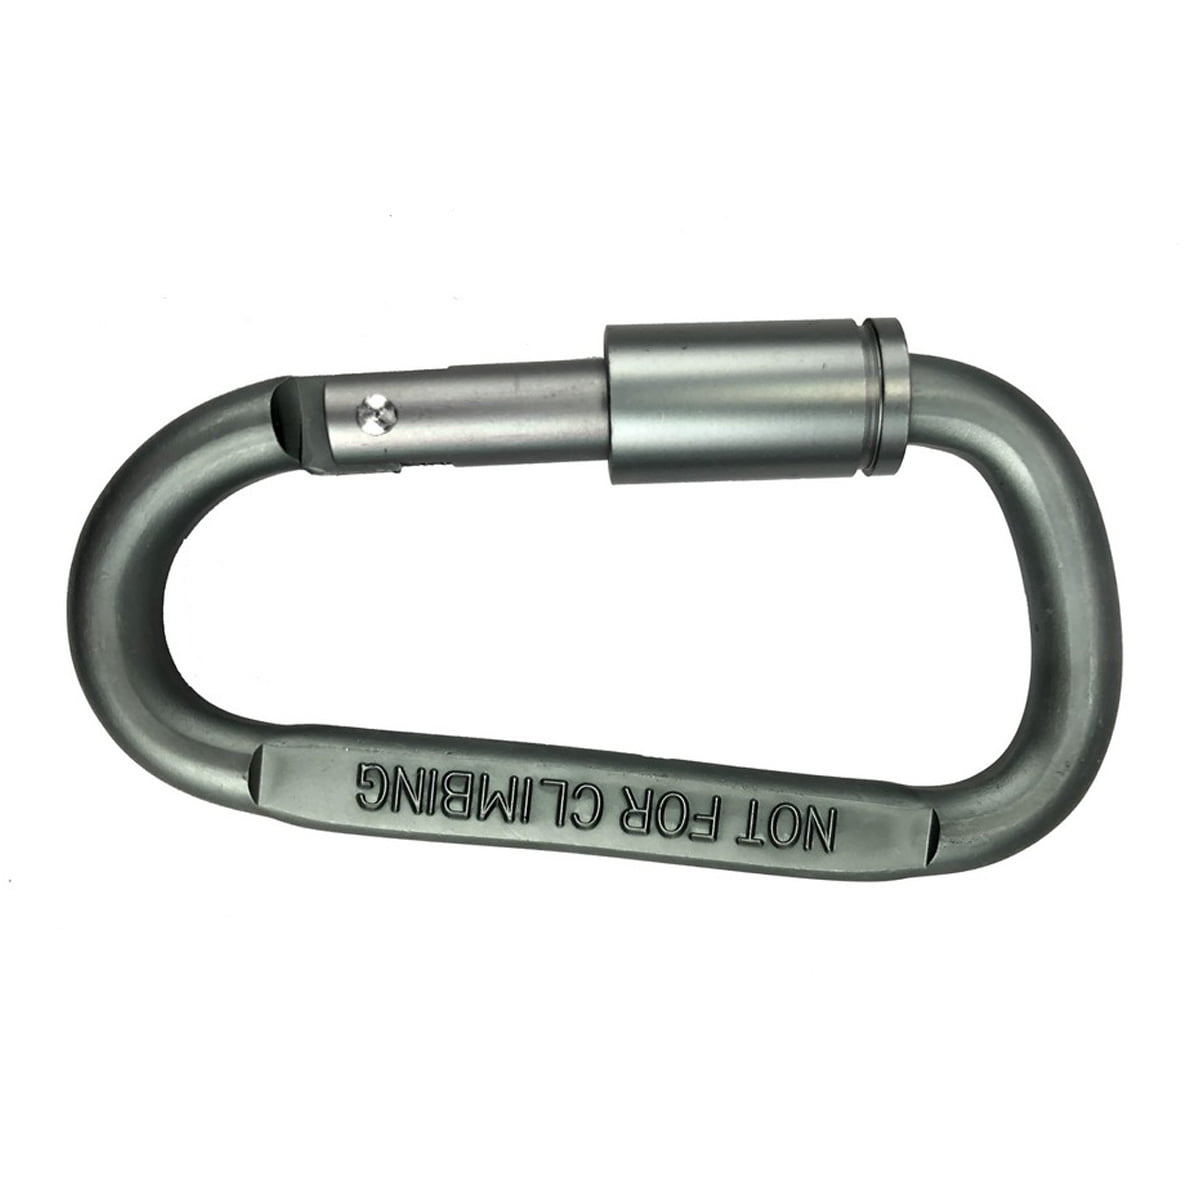 Outdoor Carabiner Climbing Lock D-Ring Keychain Survival Keychain Clip Hook 